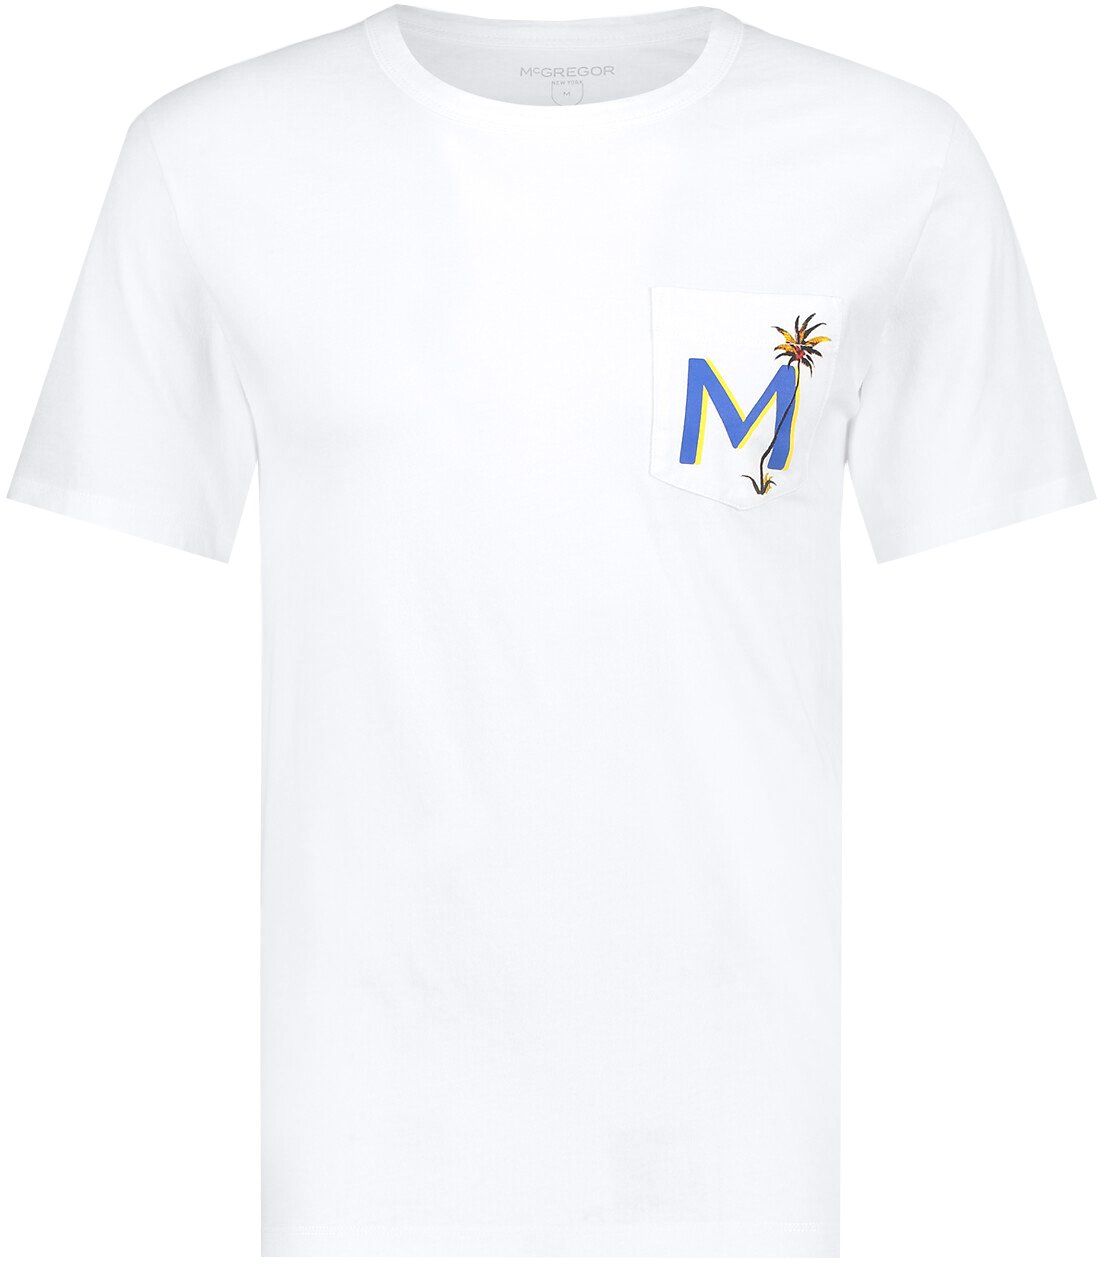 McGregor T Shirt Pocket Logo White size S